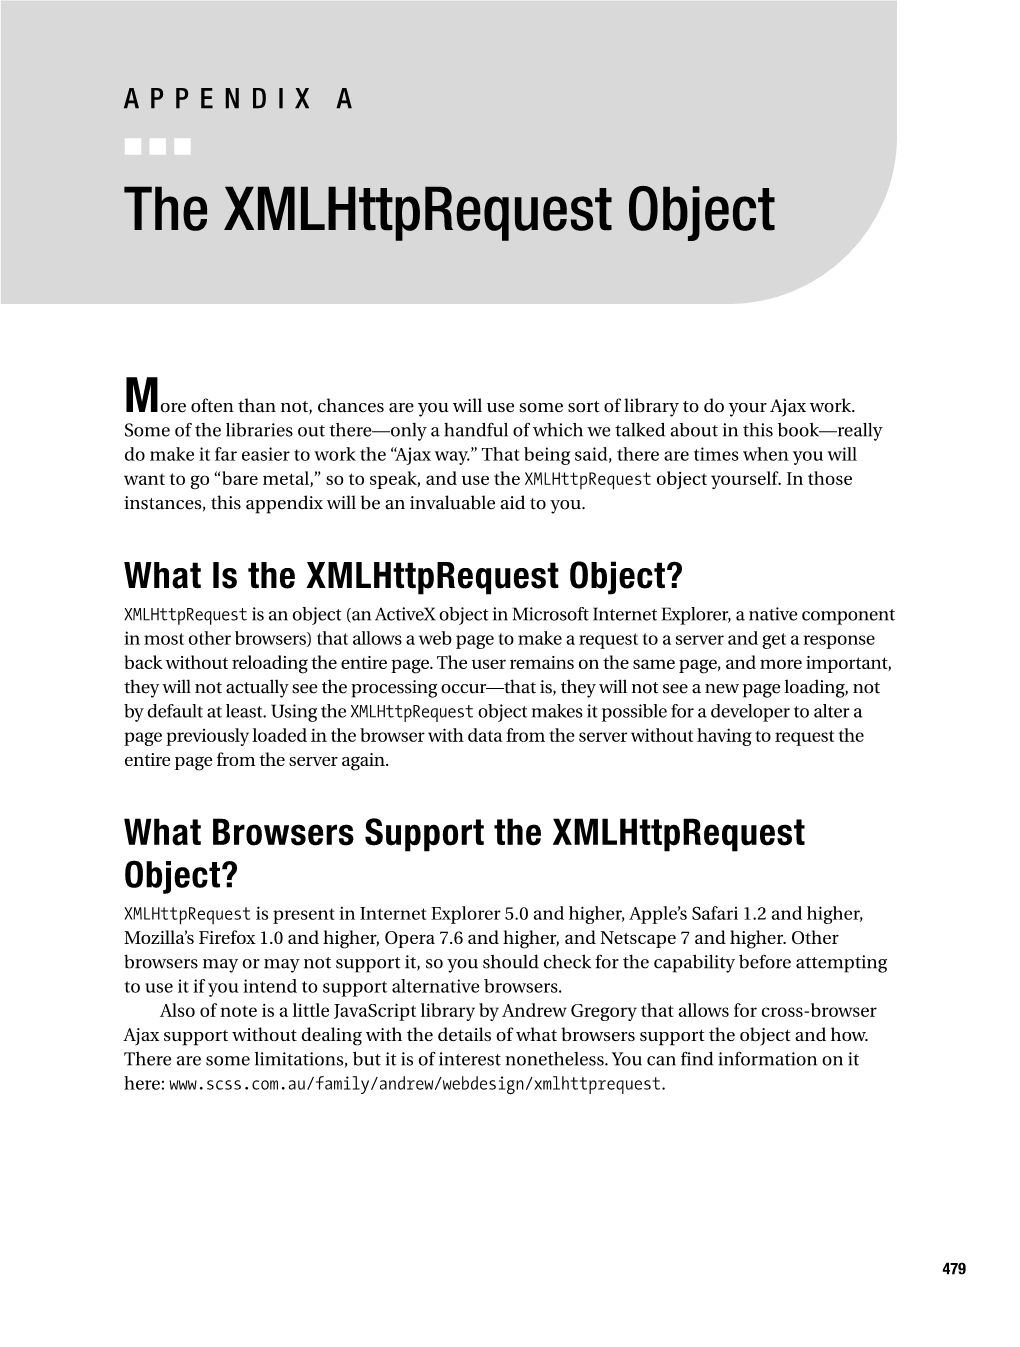 The Xmlhttprequest Object